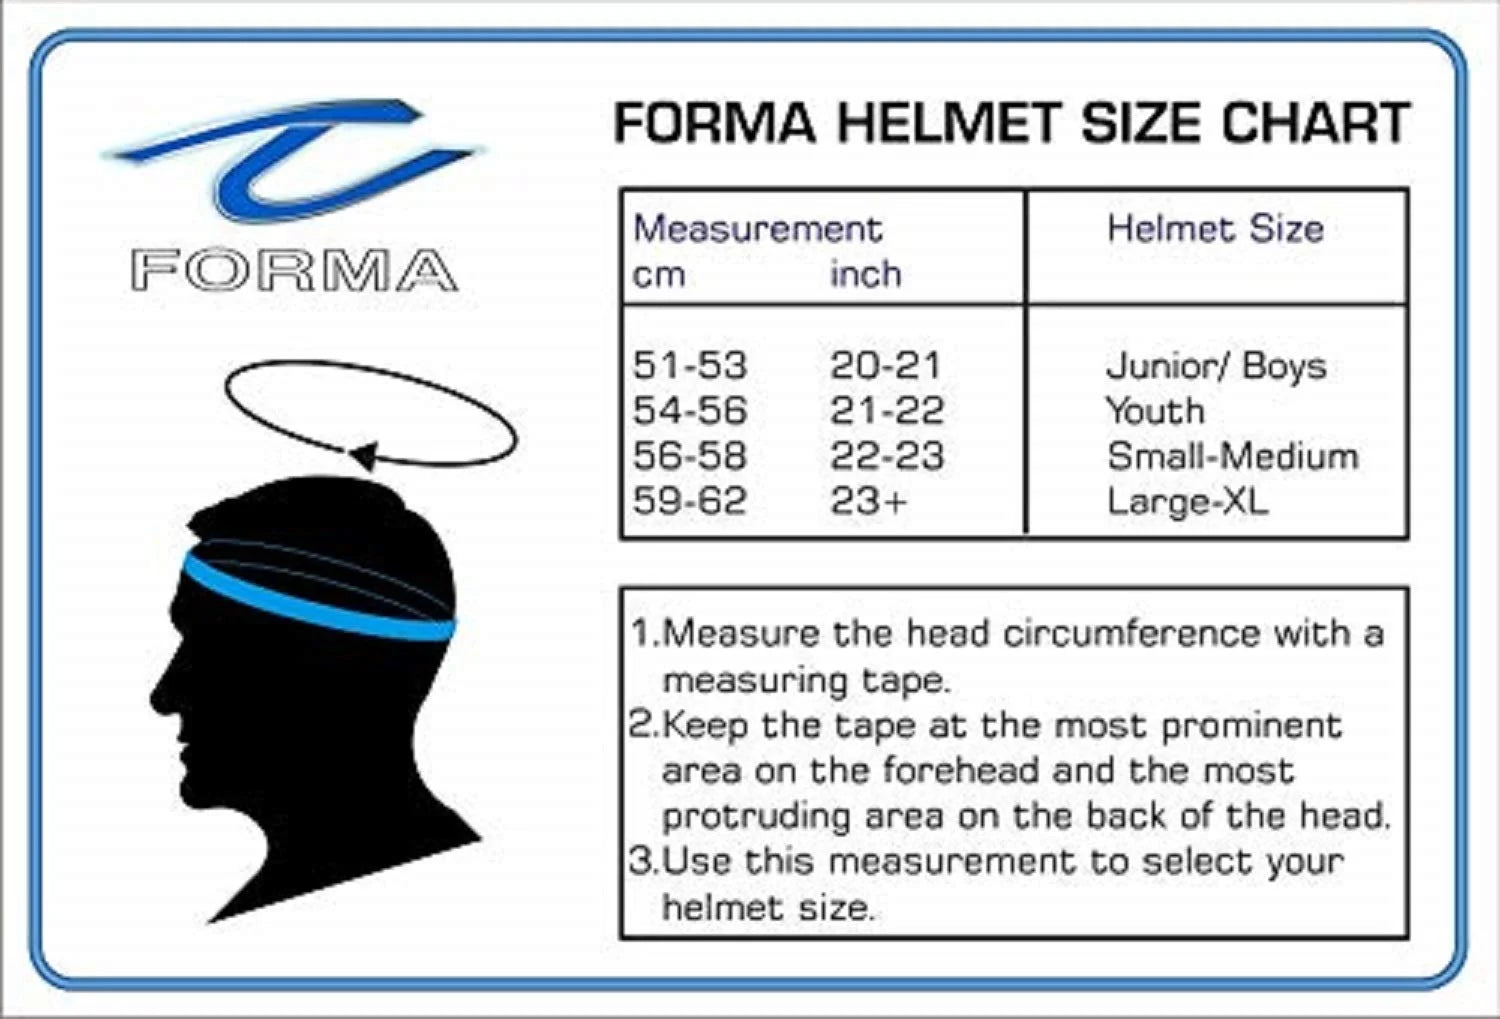 Helmet FORMA RP17 L MASTER TNM RED